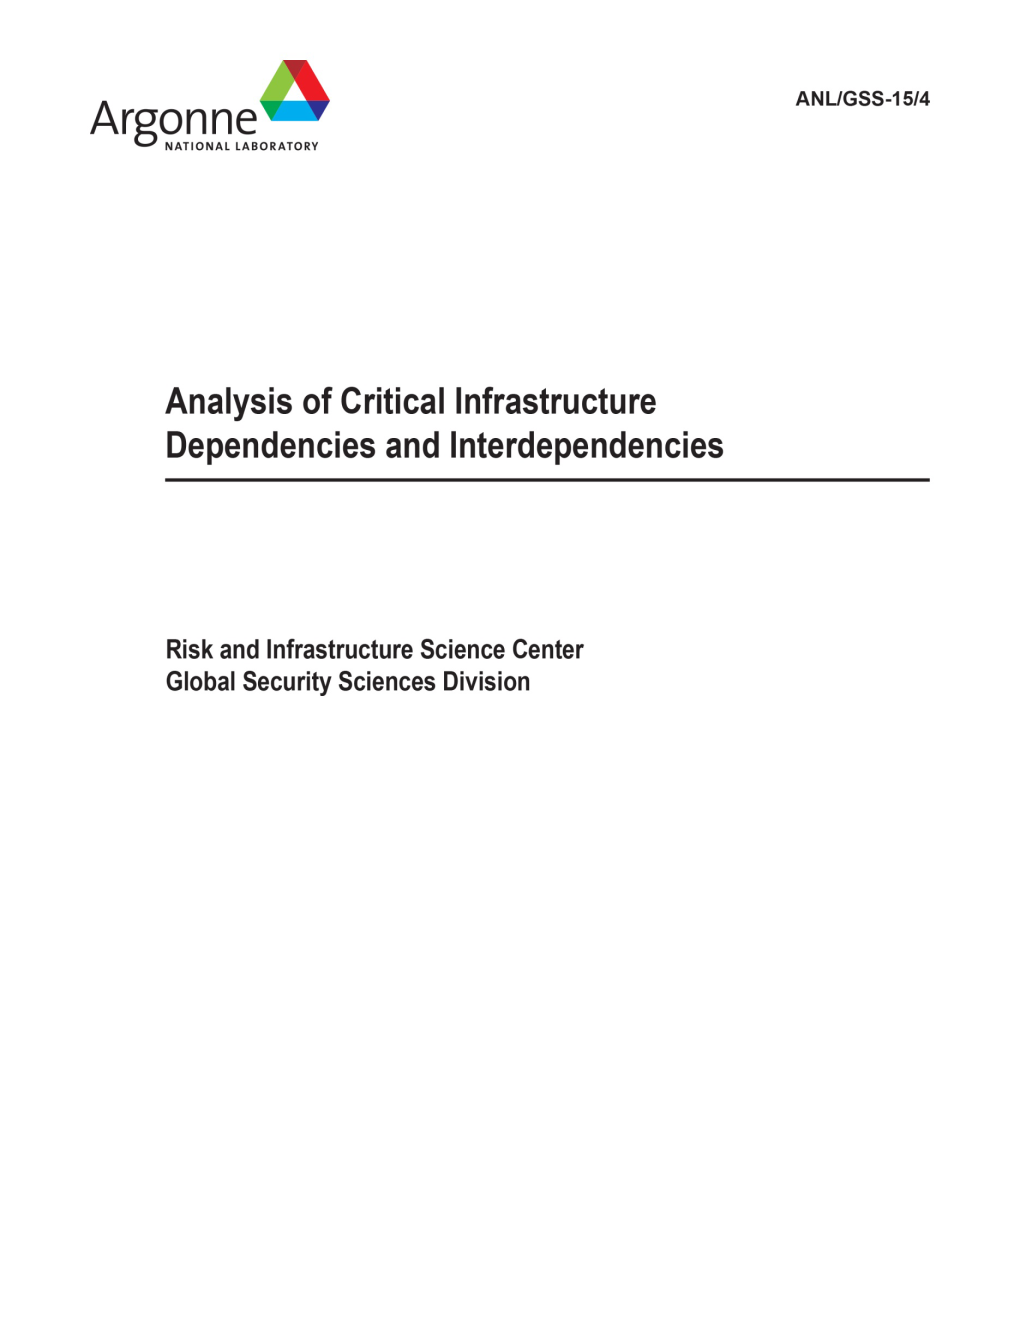 Analysis of Critical Infrastructure Dependencies and Interdependencies